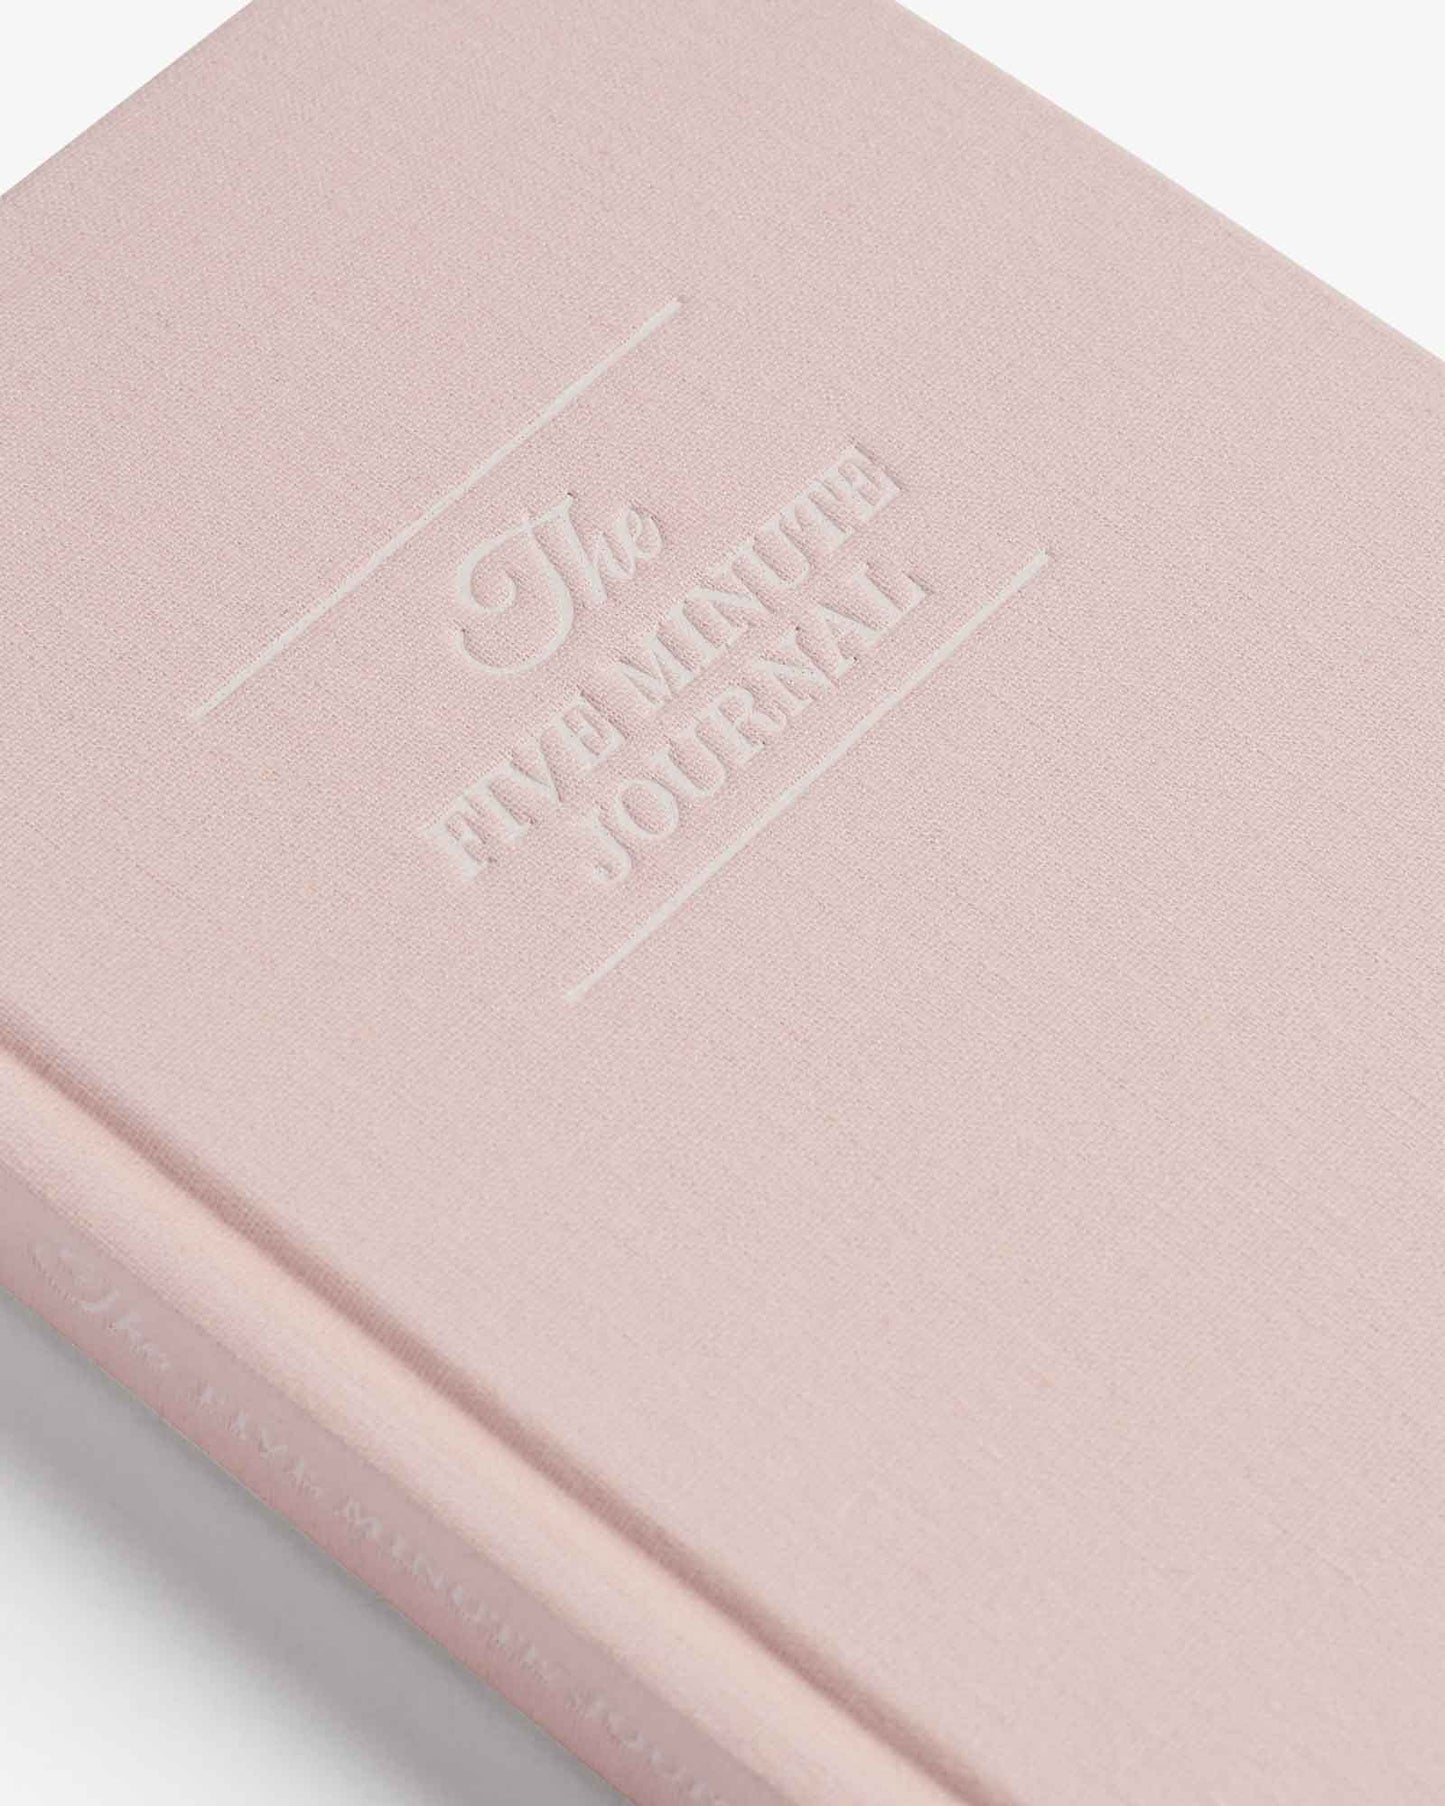 Grateful Workflow Weekly Bundle - Blush Pink by Intelligent Change